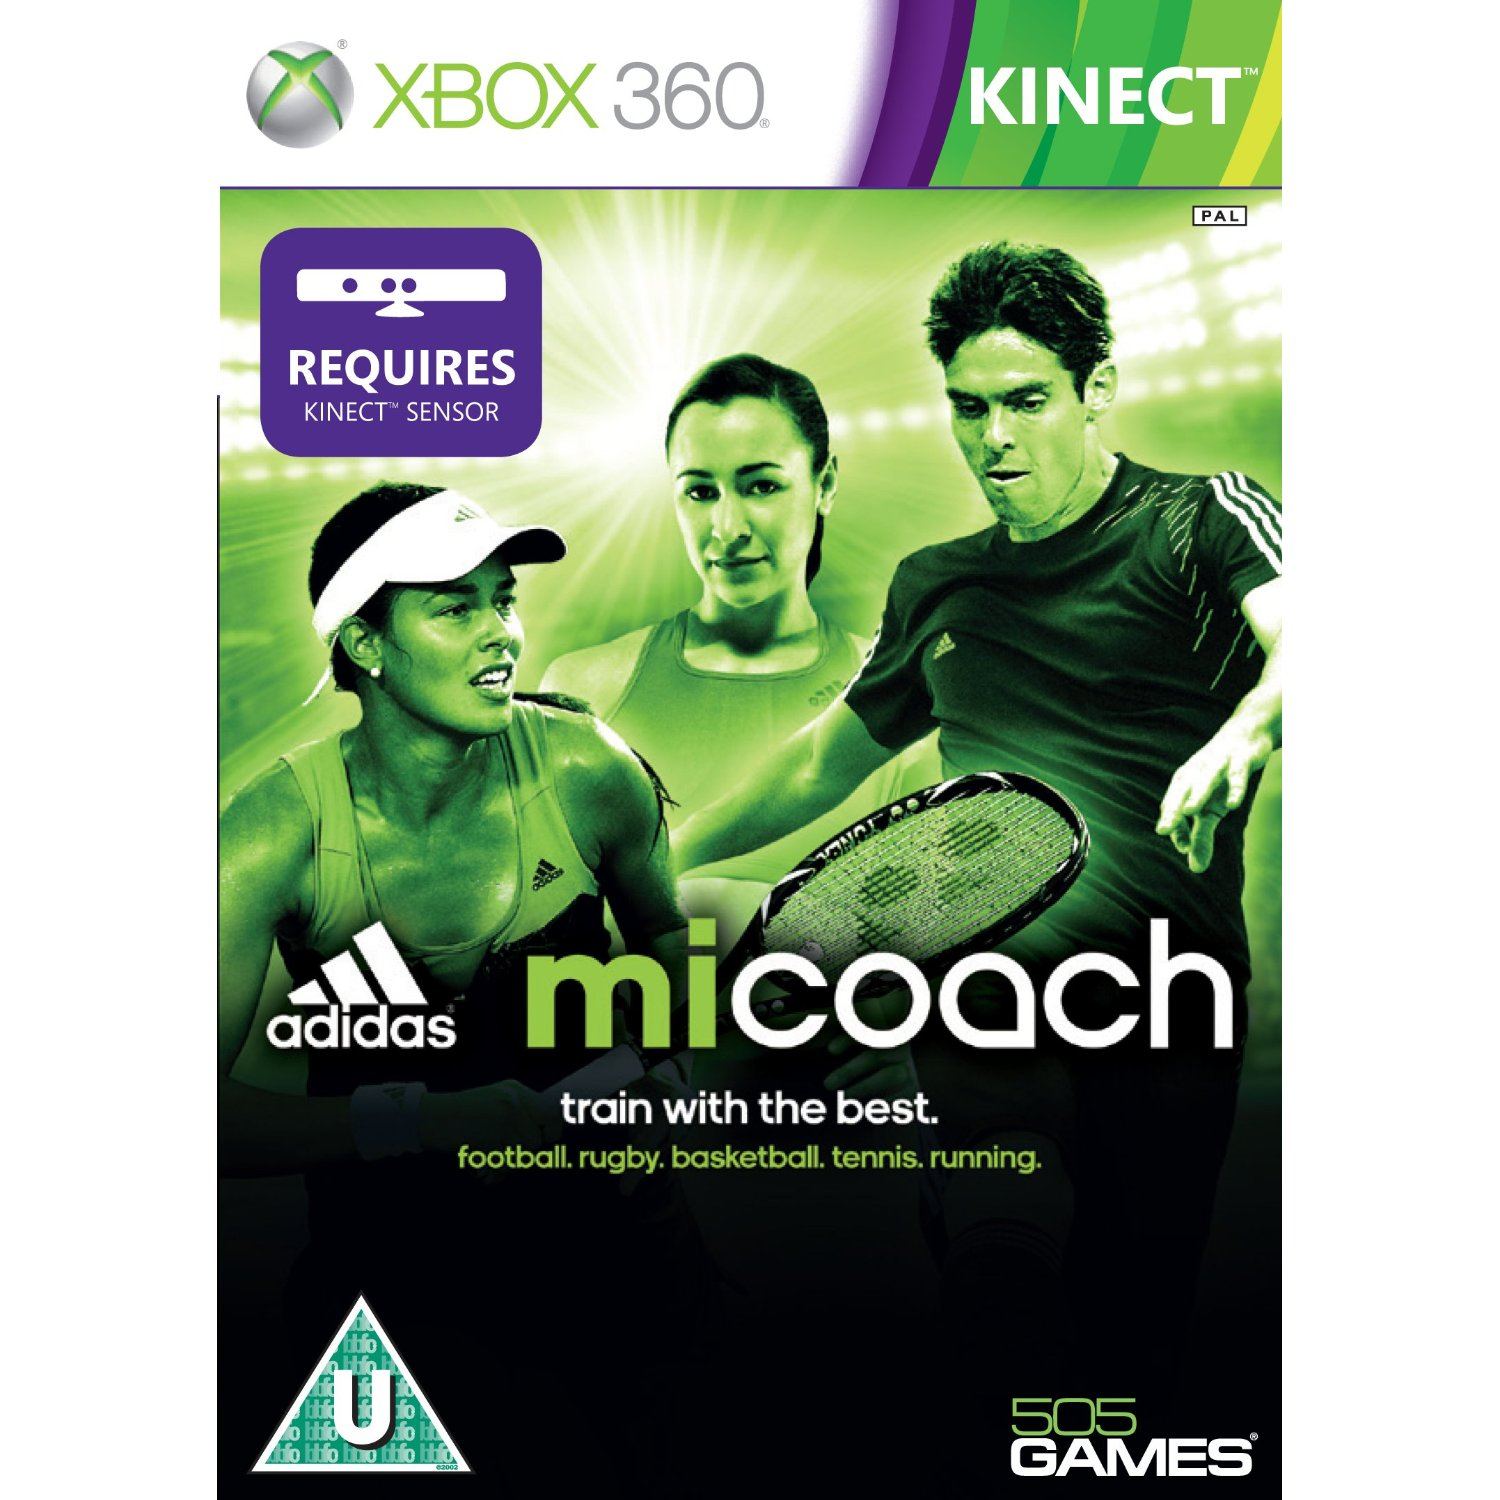 Adidas for Xbox360, Kinect